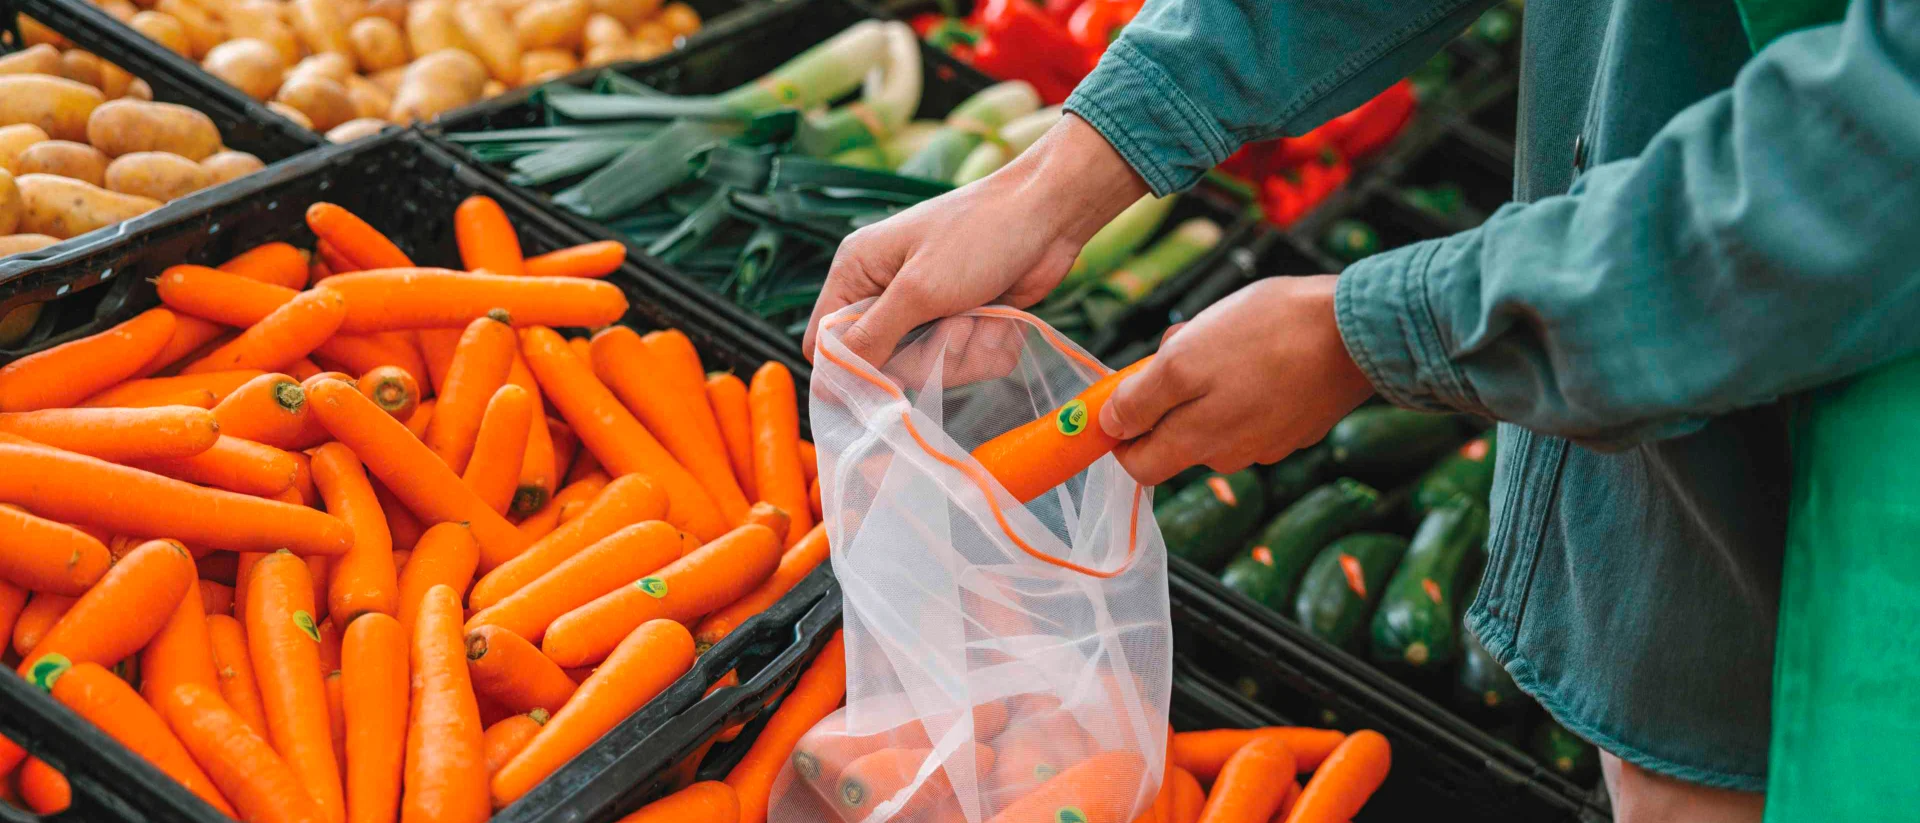 A customer puts organic carrots into a reusable vegetable bag.